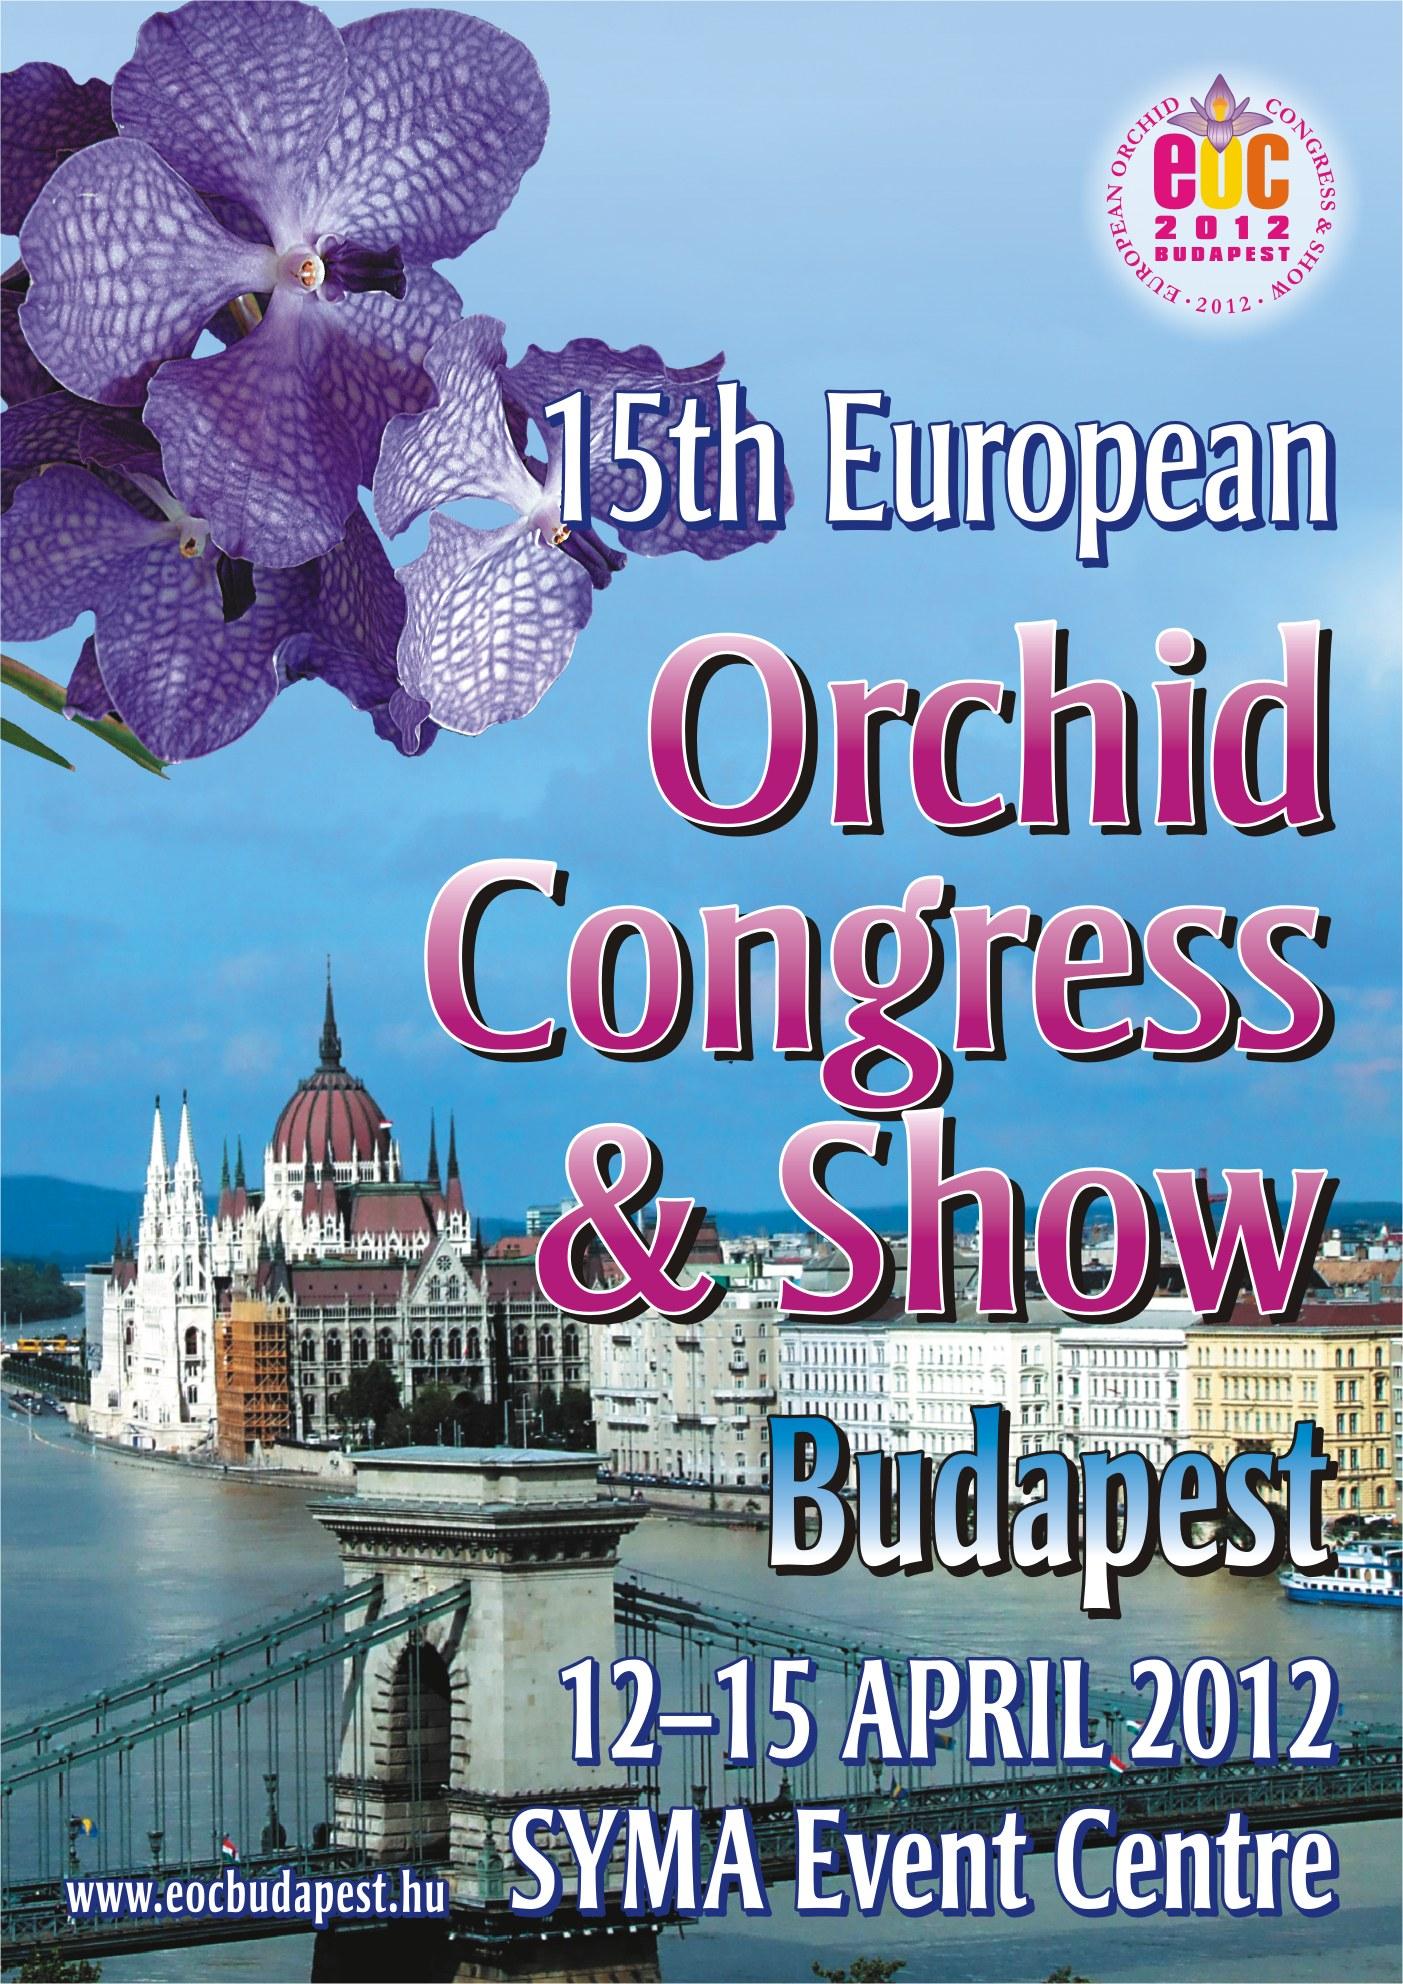 Invitation: European Orchid Show, Syma Hall Budapest, 12 - 15 April